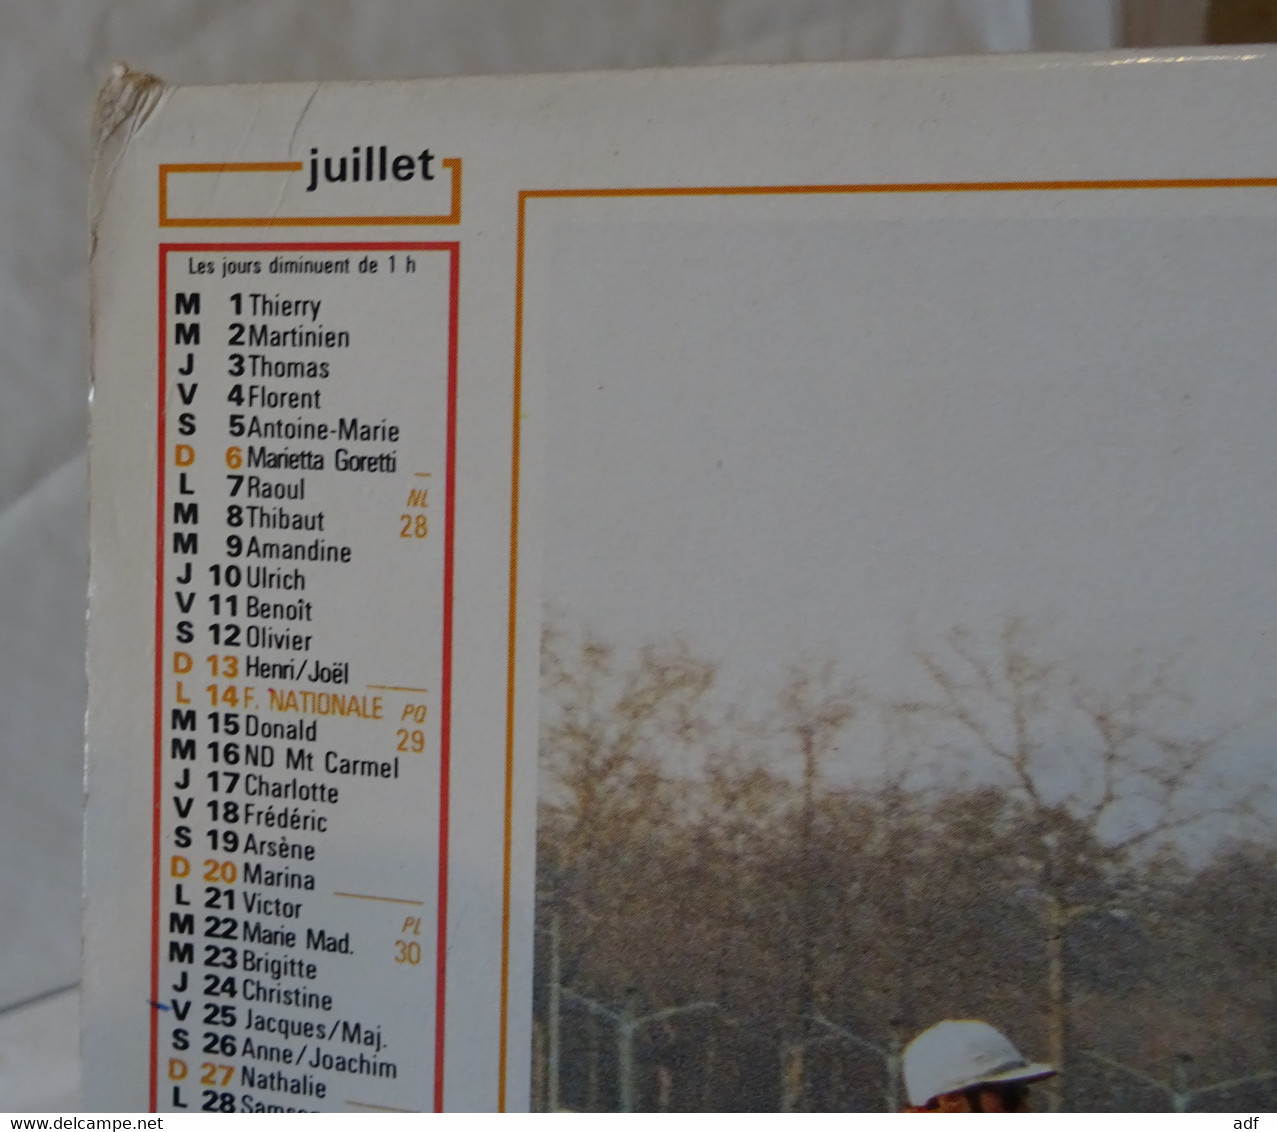 1986 CALENDRIER ALMANACH DES PTT, EQUIPE DE FRANCE FOOT CHAMPIONNE D'EUROPE 1984, LURABO CHEVAL TROT, OLLER, ARDENNES 08